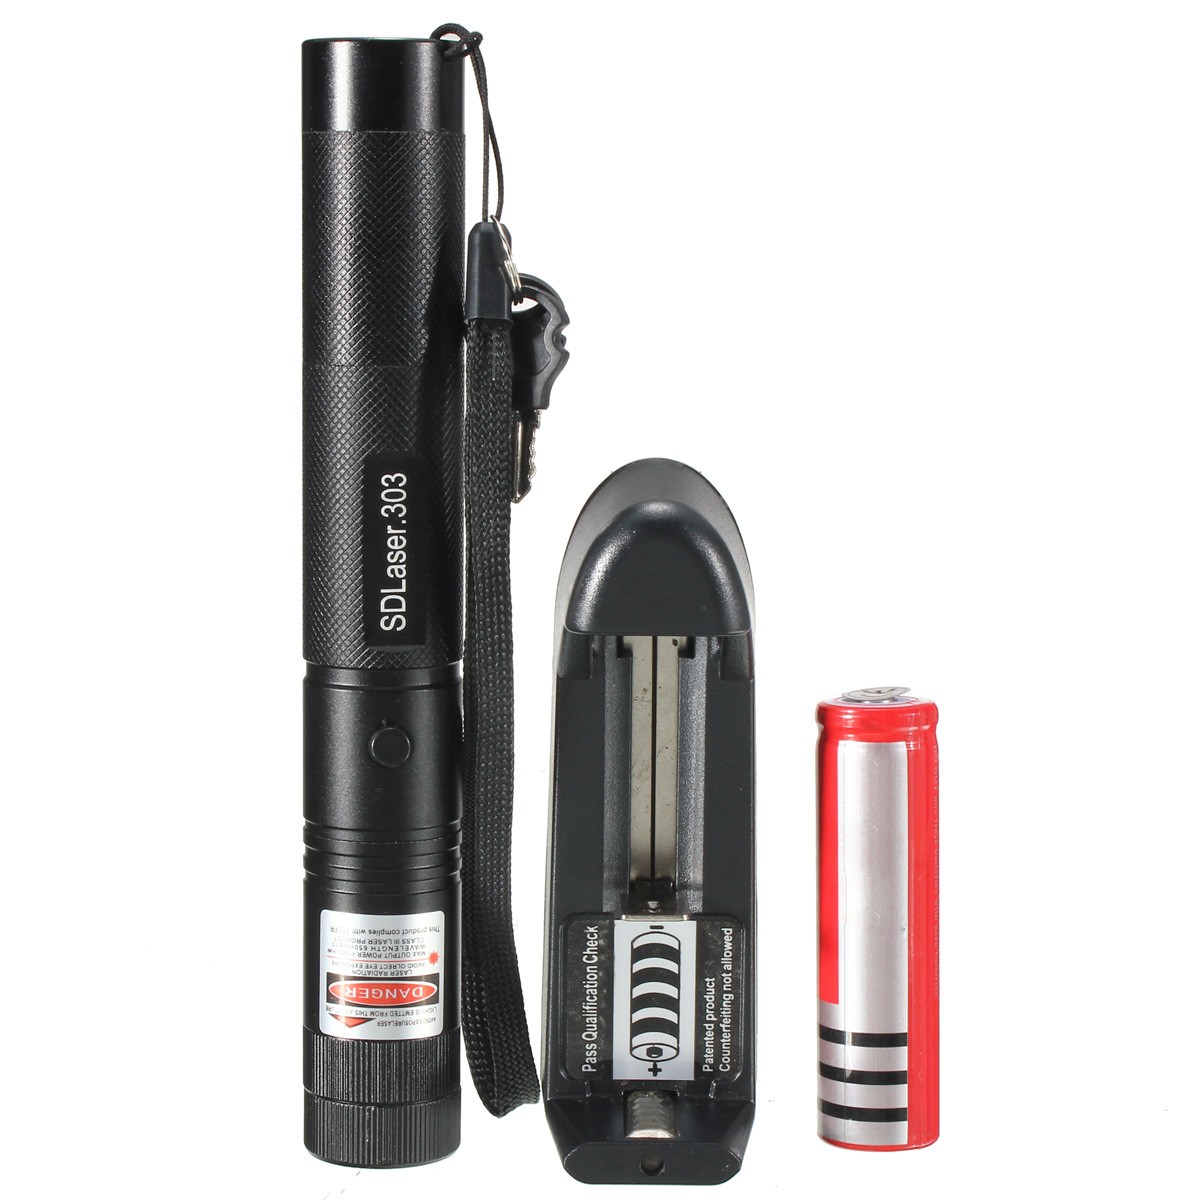 High quality Laser 303 power Green Light Laser Pen laser pointer Adjustable for Focus pen light+18650 Battery +Charger+2x Keys